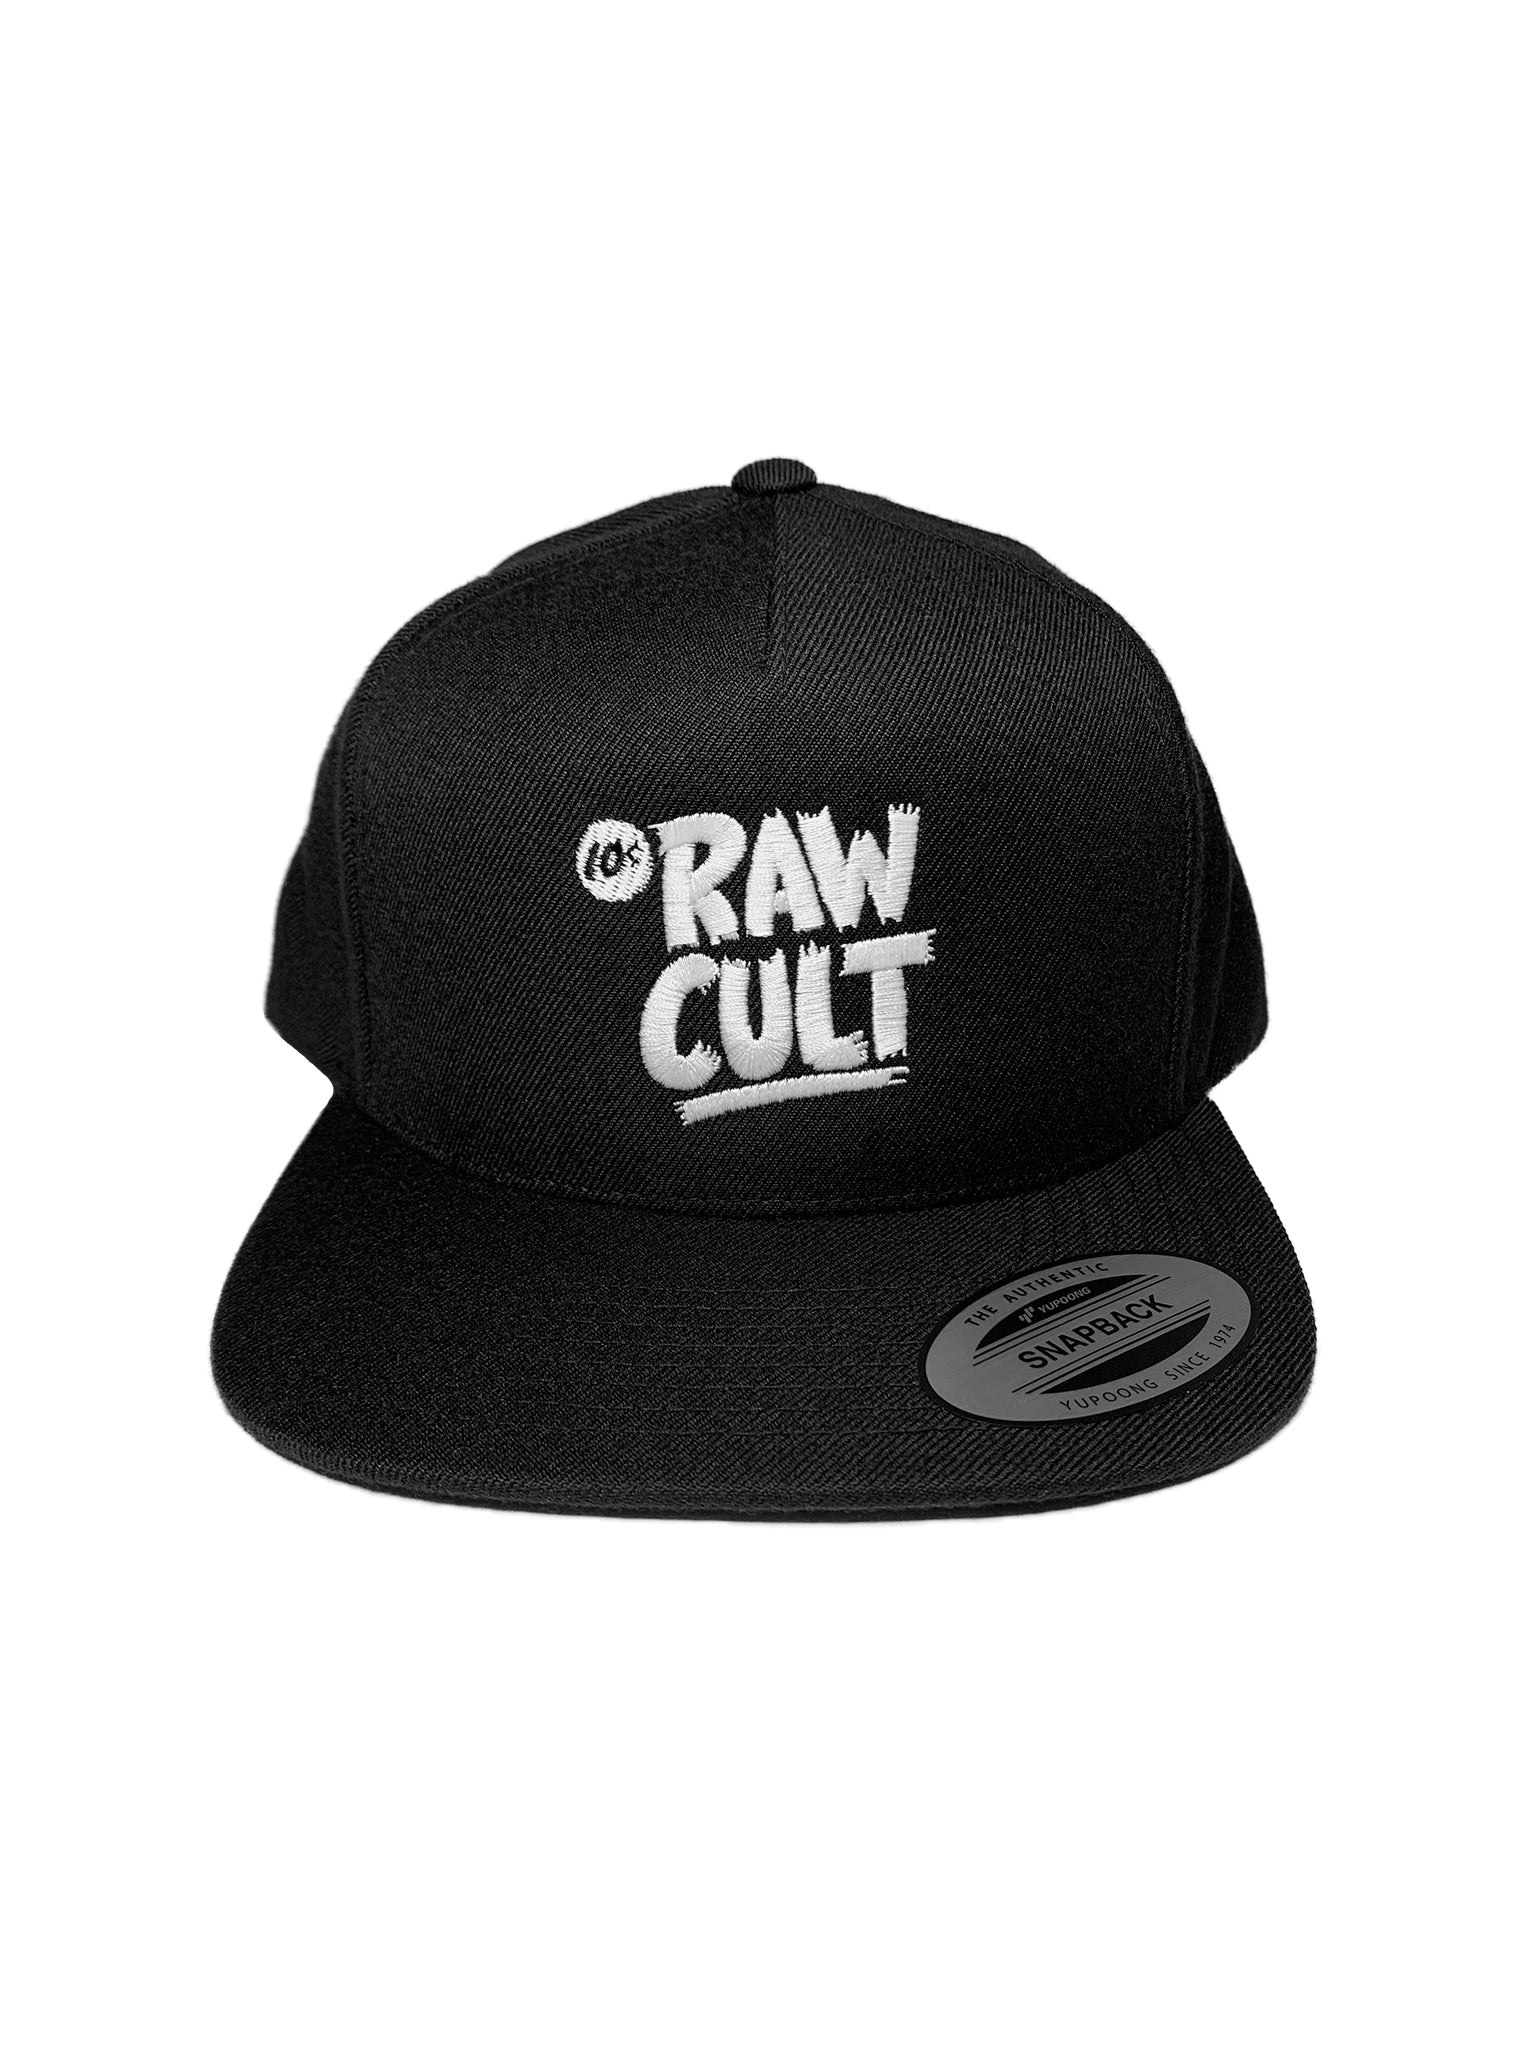 RAW CULT | Logo Snapback Cap - White on Black